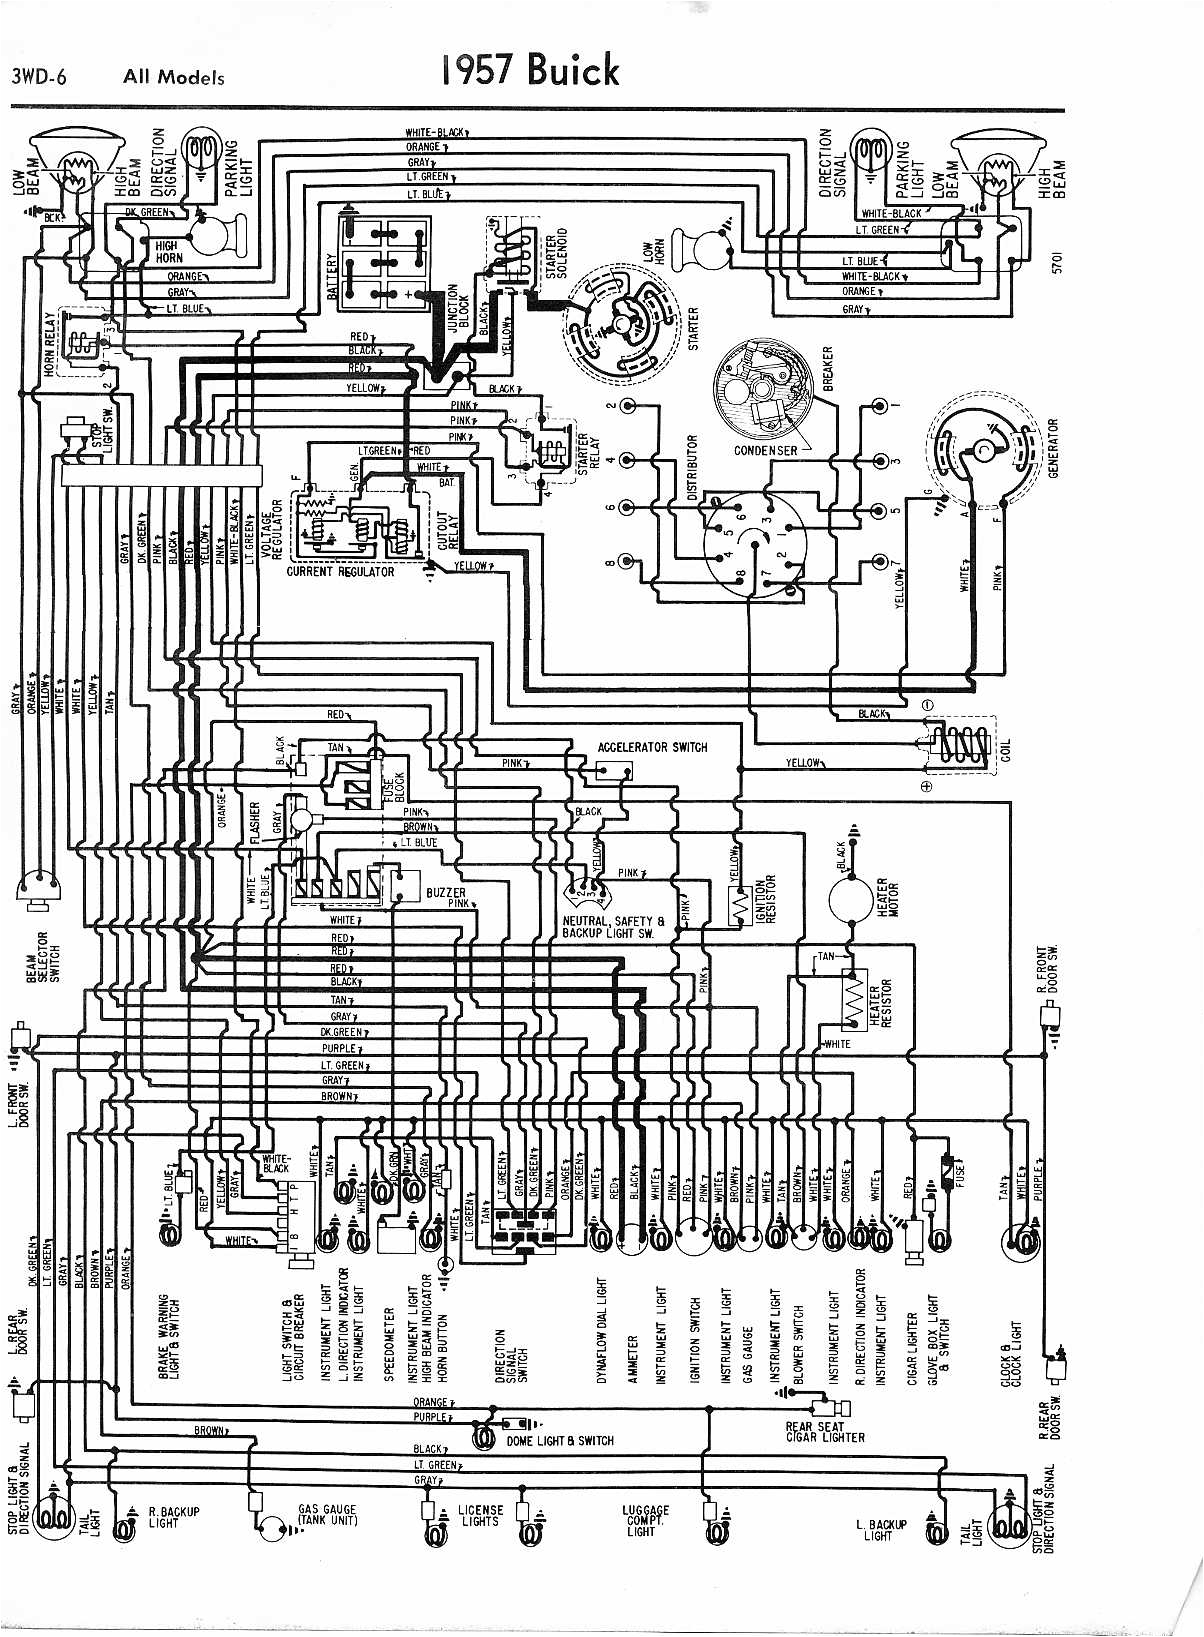 2000 buick century engine diagram 67 buick wiring diagram free download wiring diagrams schematics jpg